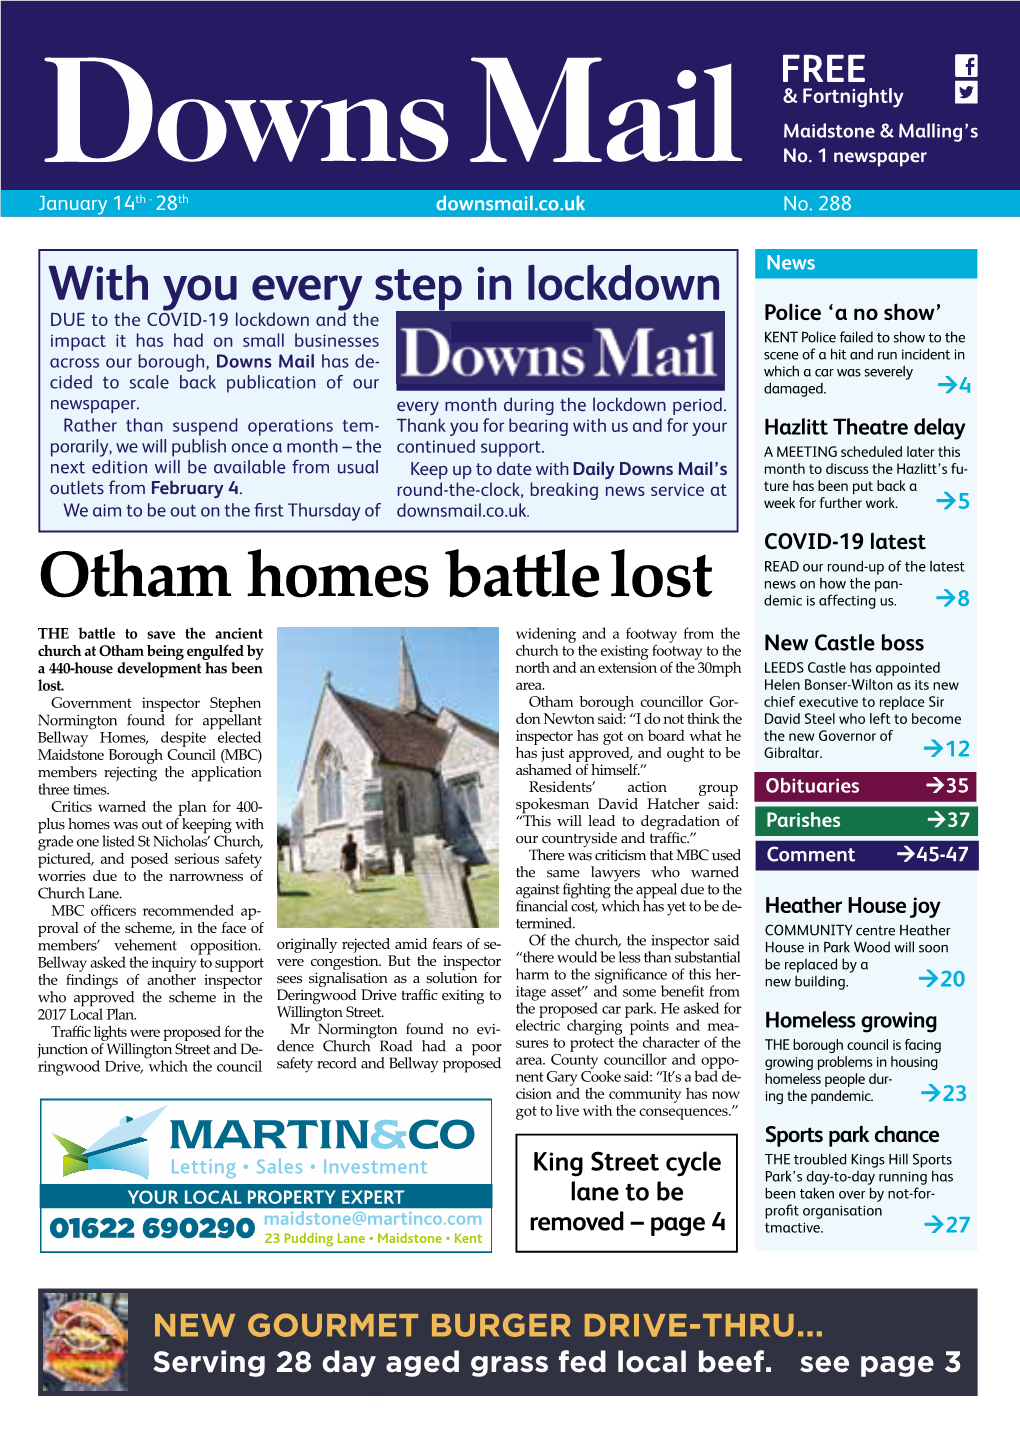 Otham Homes Battle Lost